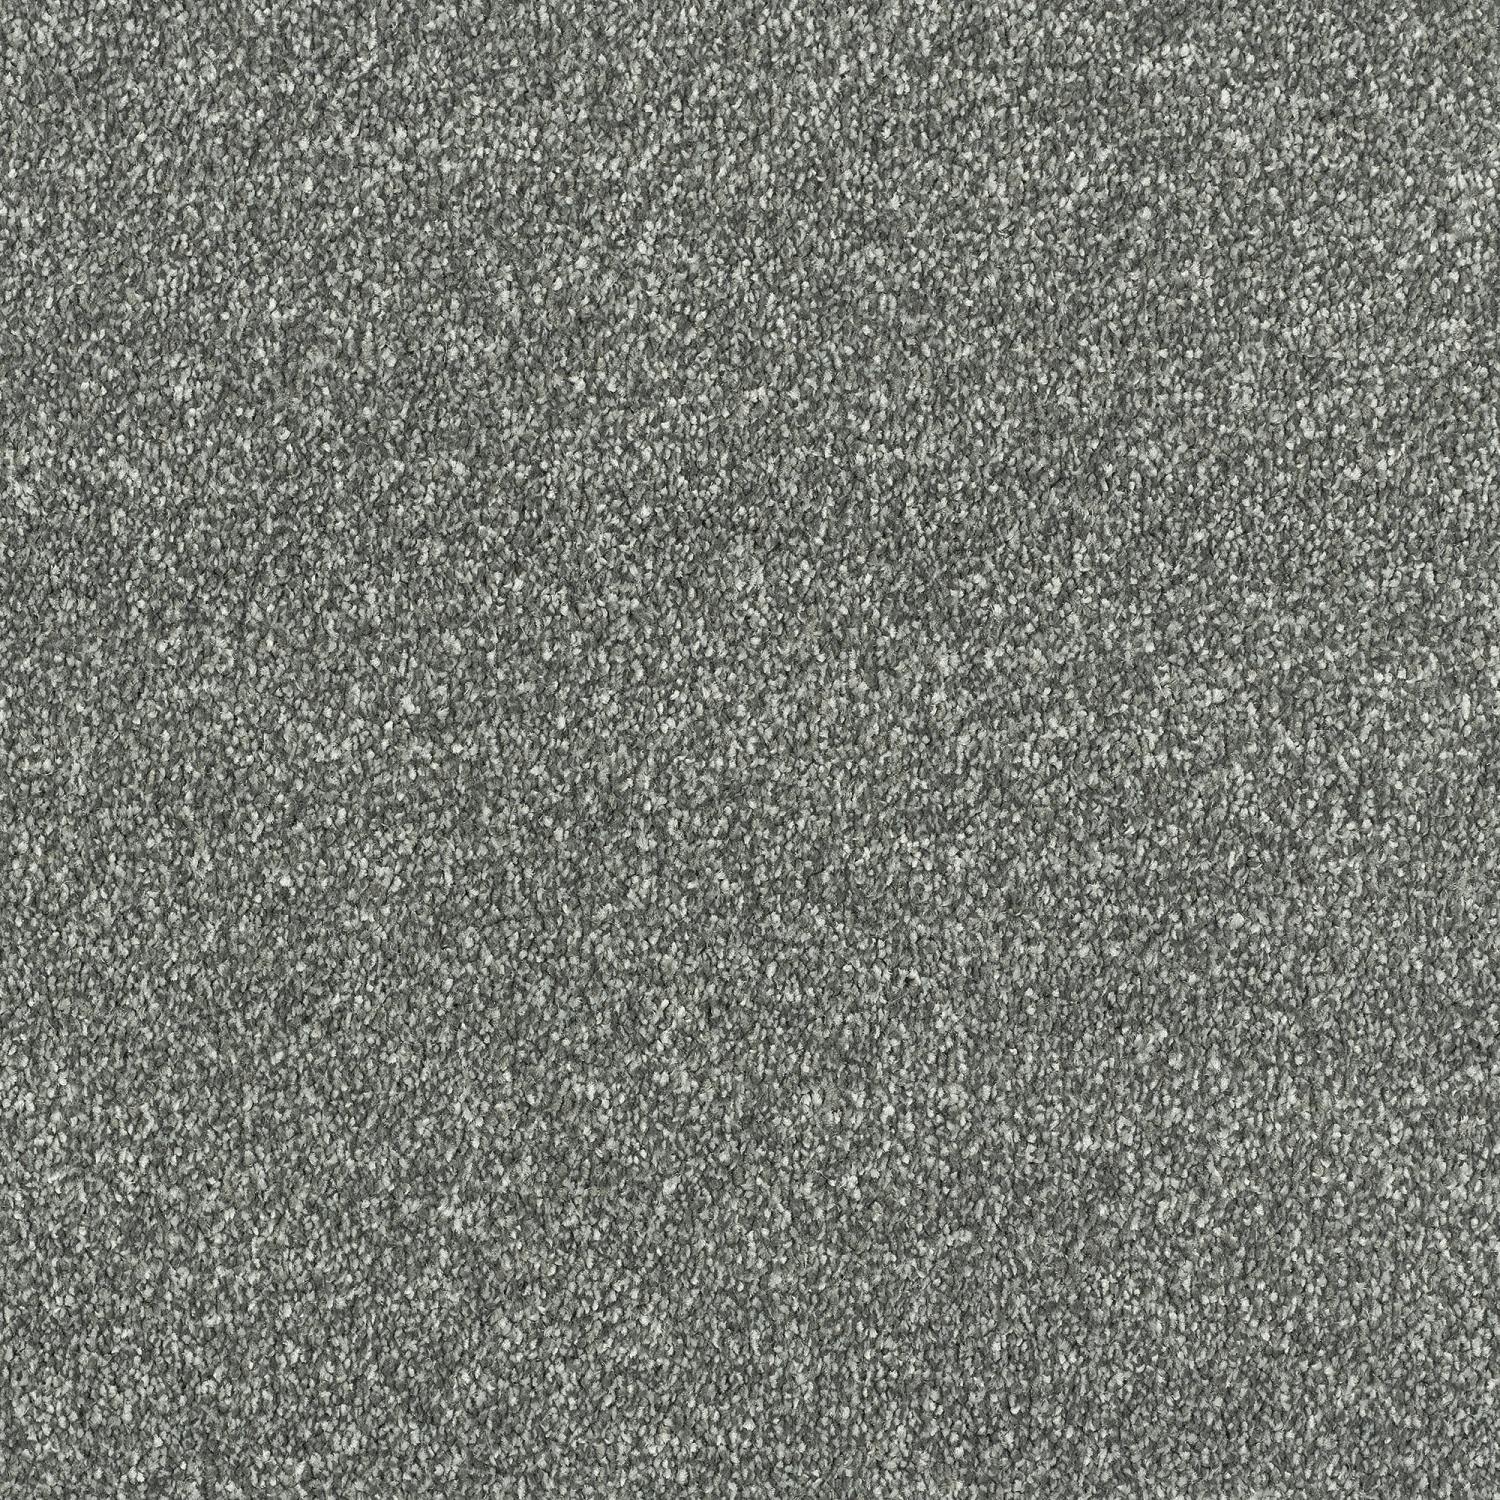 Stainfree Maximus Saxony Carpet - Caesar Grey